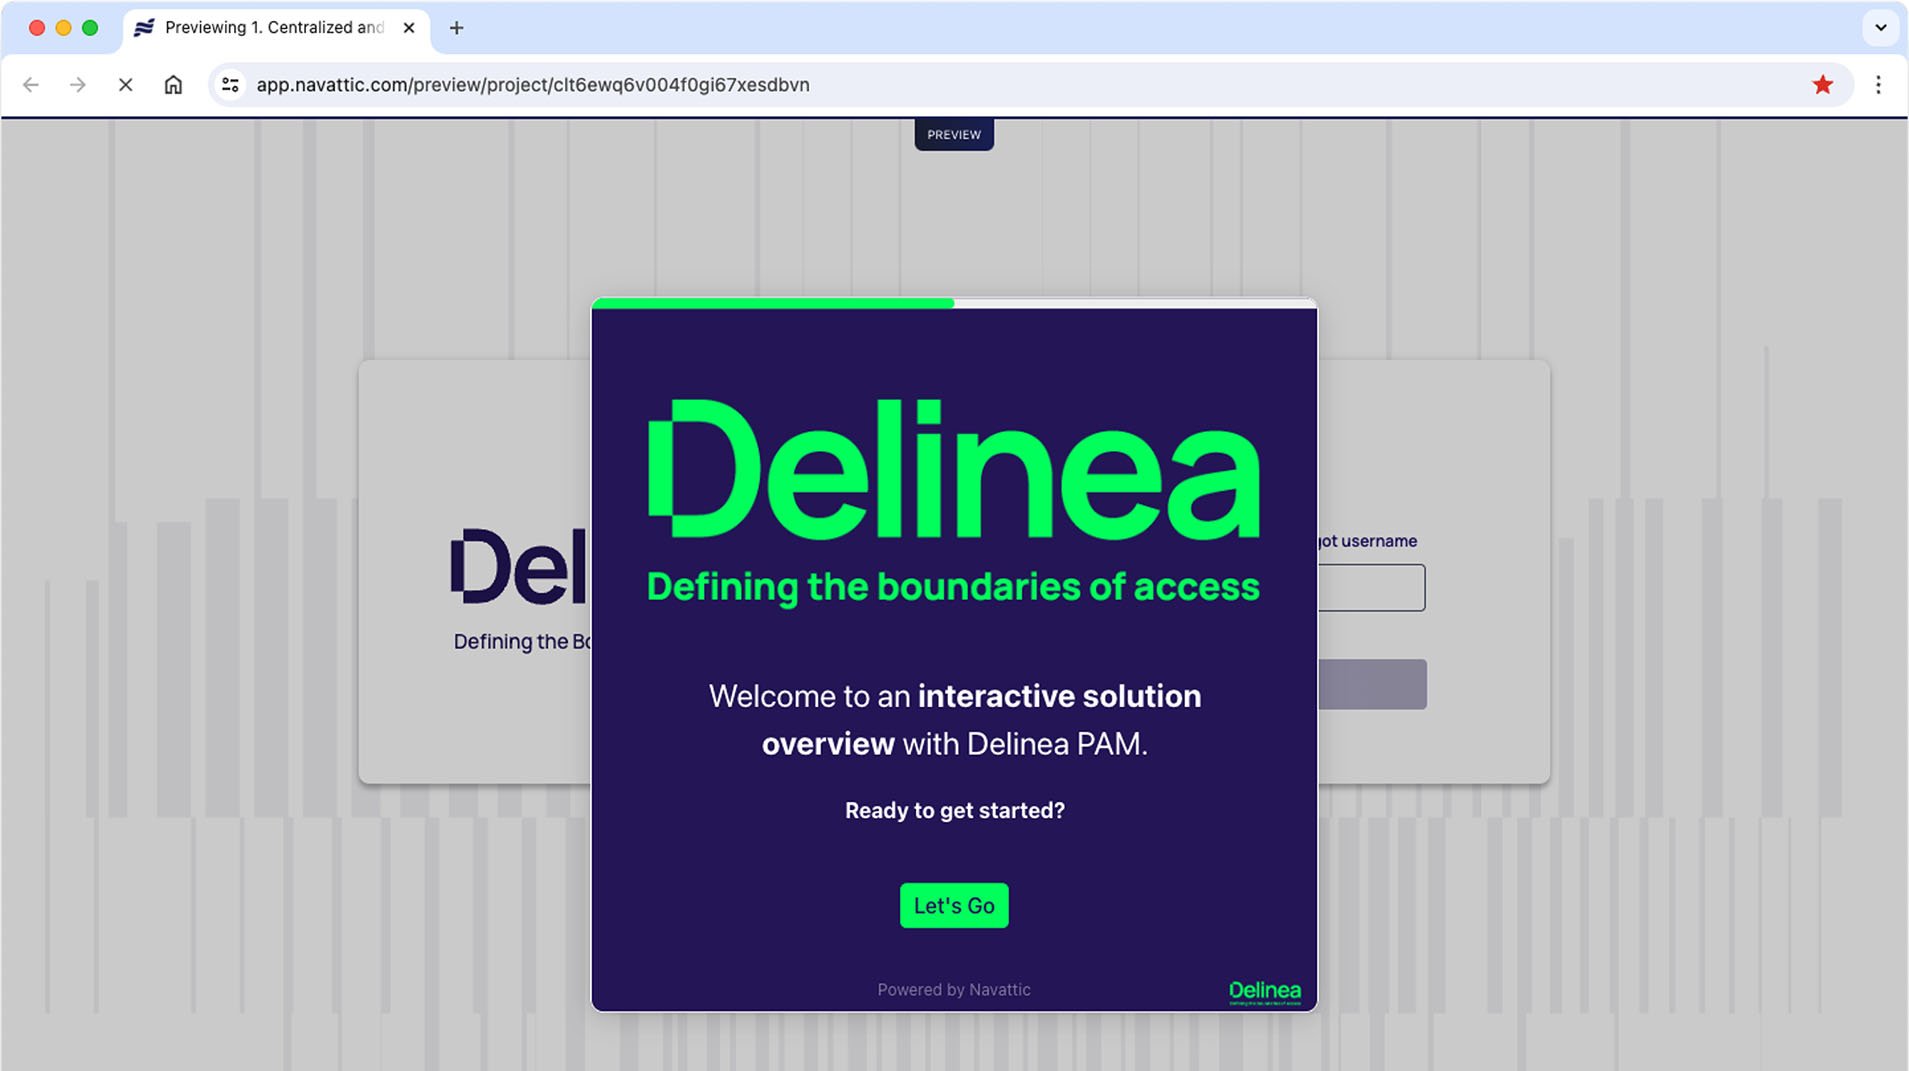 delinea-screenshot-remote-access-service-demos